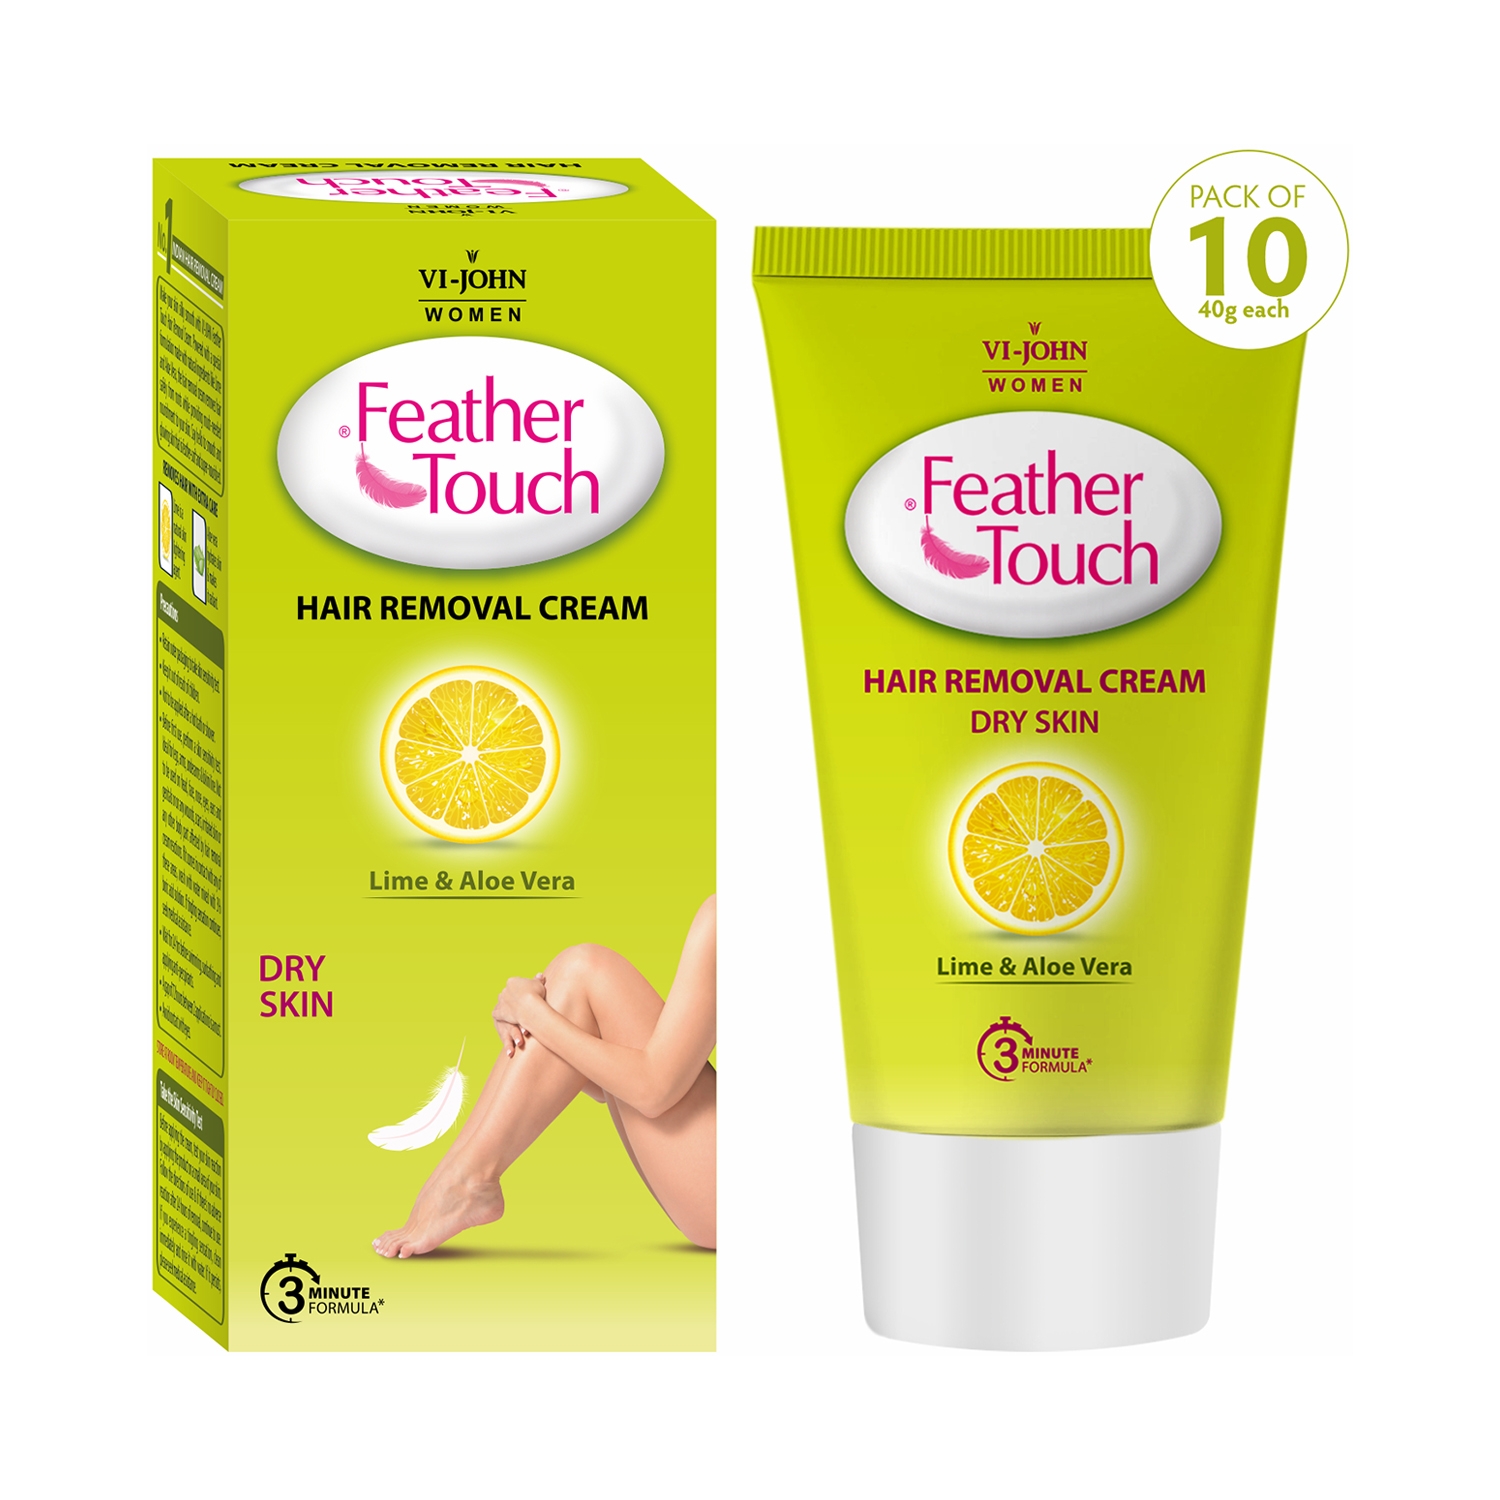 VI-JOHN | VI-JOHN Feather Touch Haldi & Chandan Hair Removal Cream (Pack of 10)